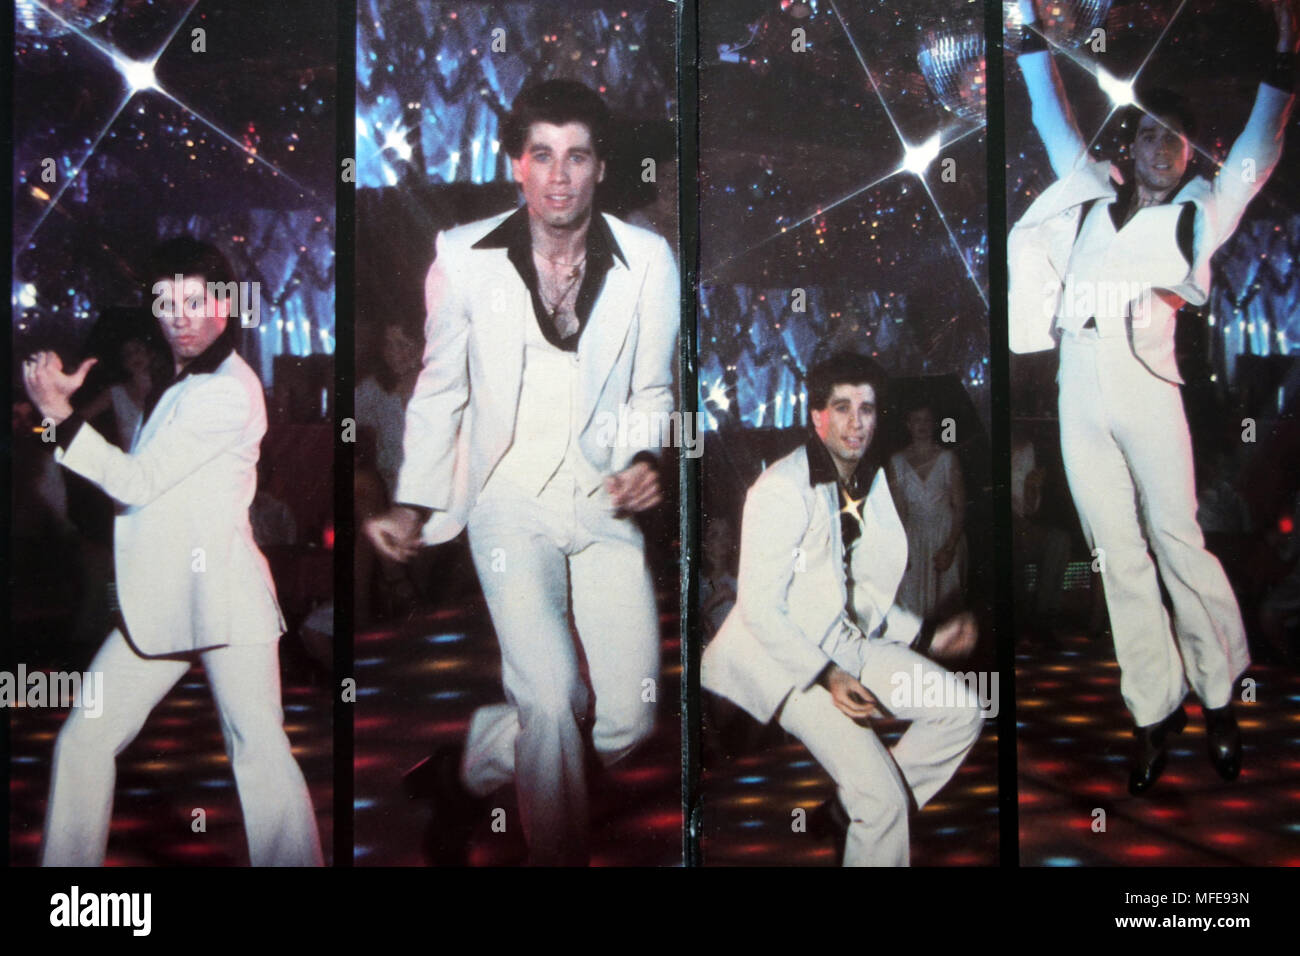 John Travolta Dancing High Resolution Stock Photography And Images Alamy